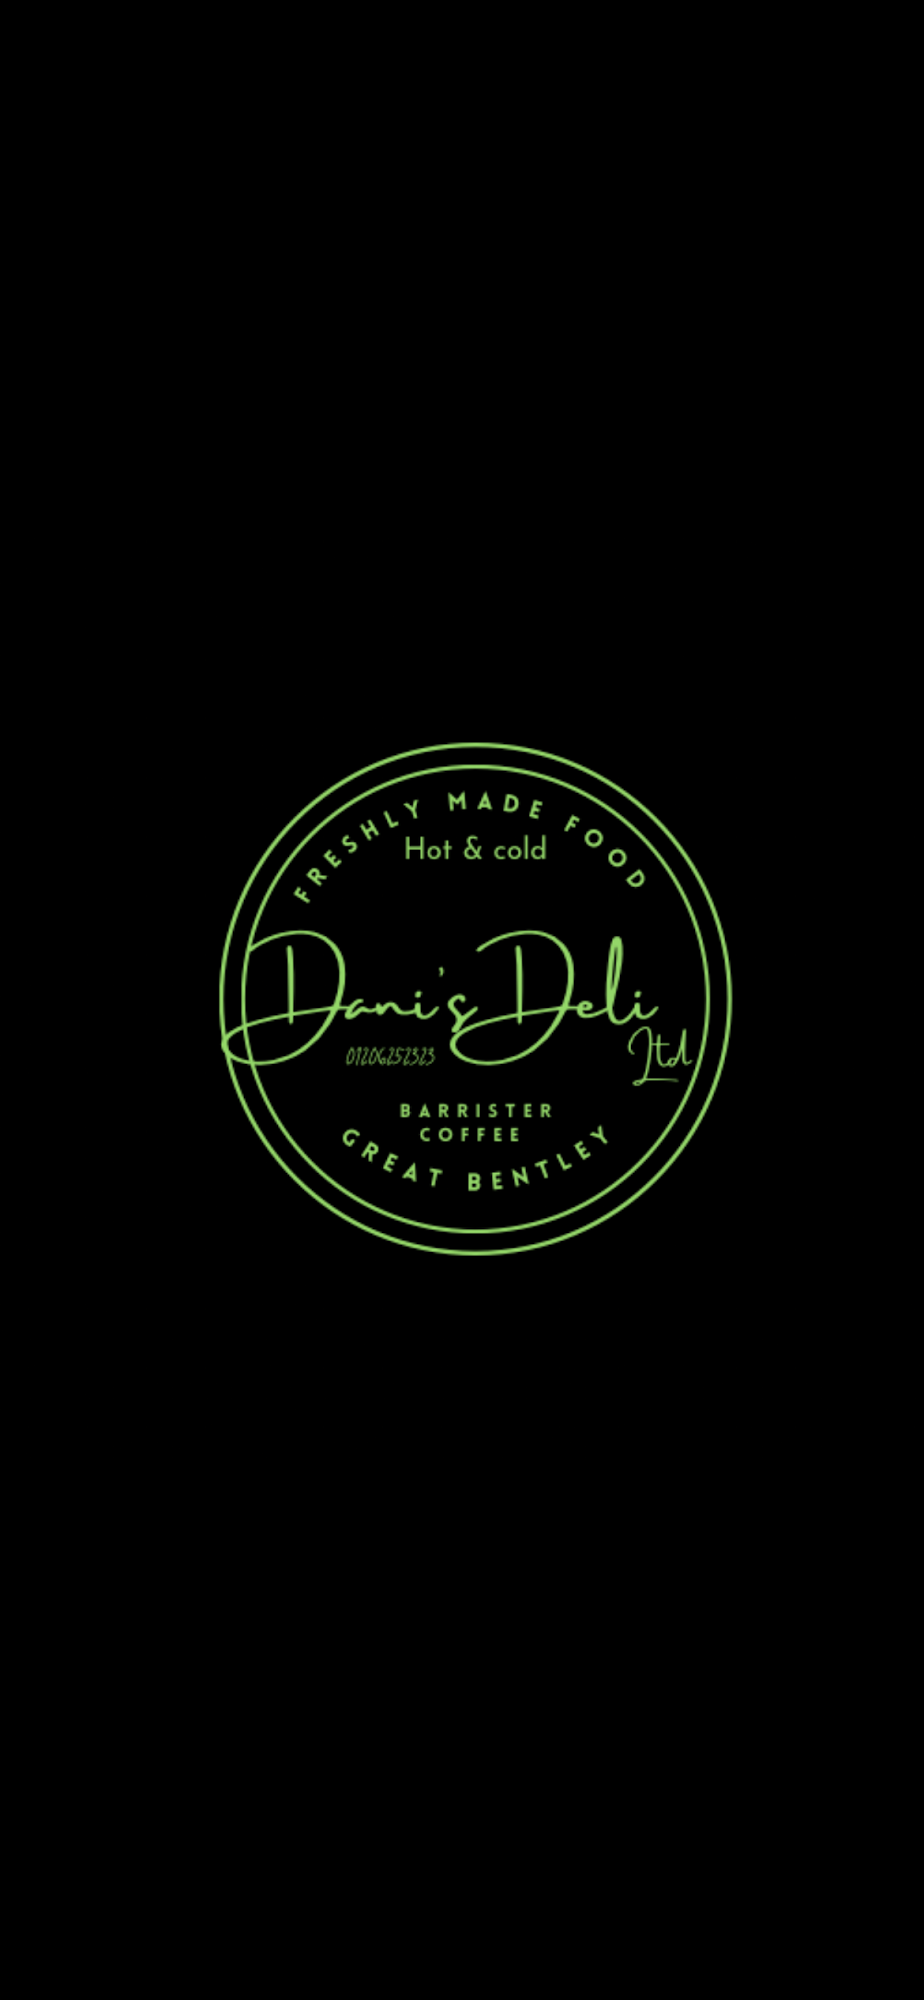 Dani’s Deli LTD